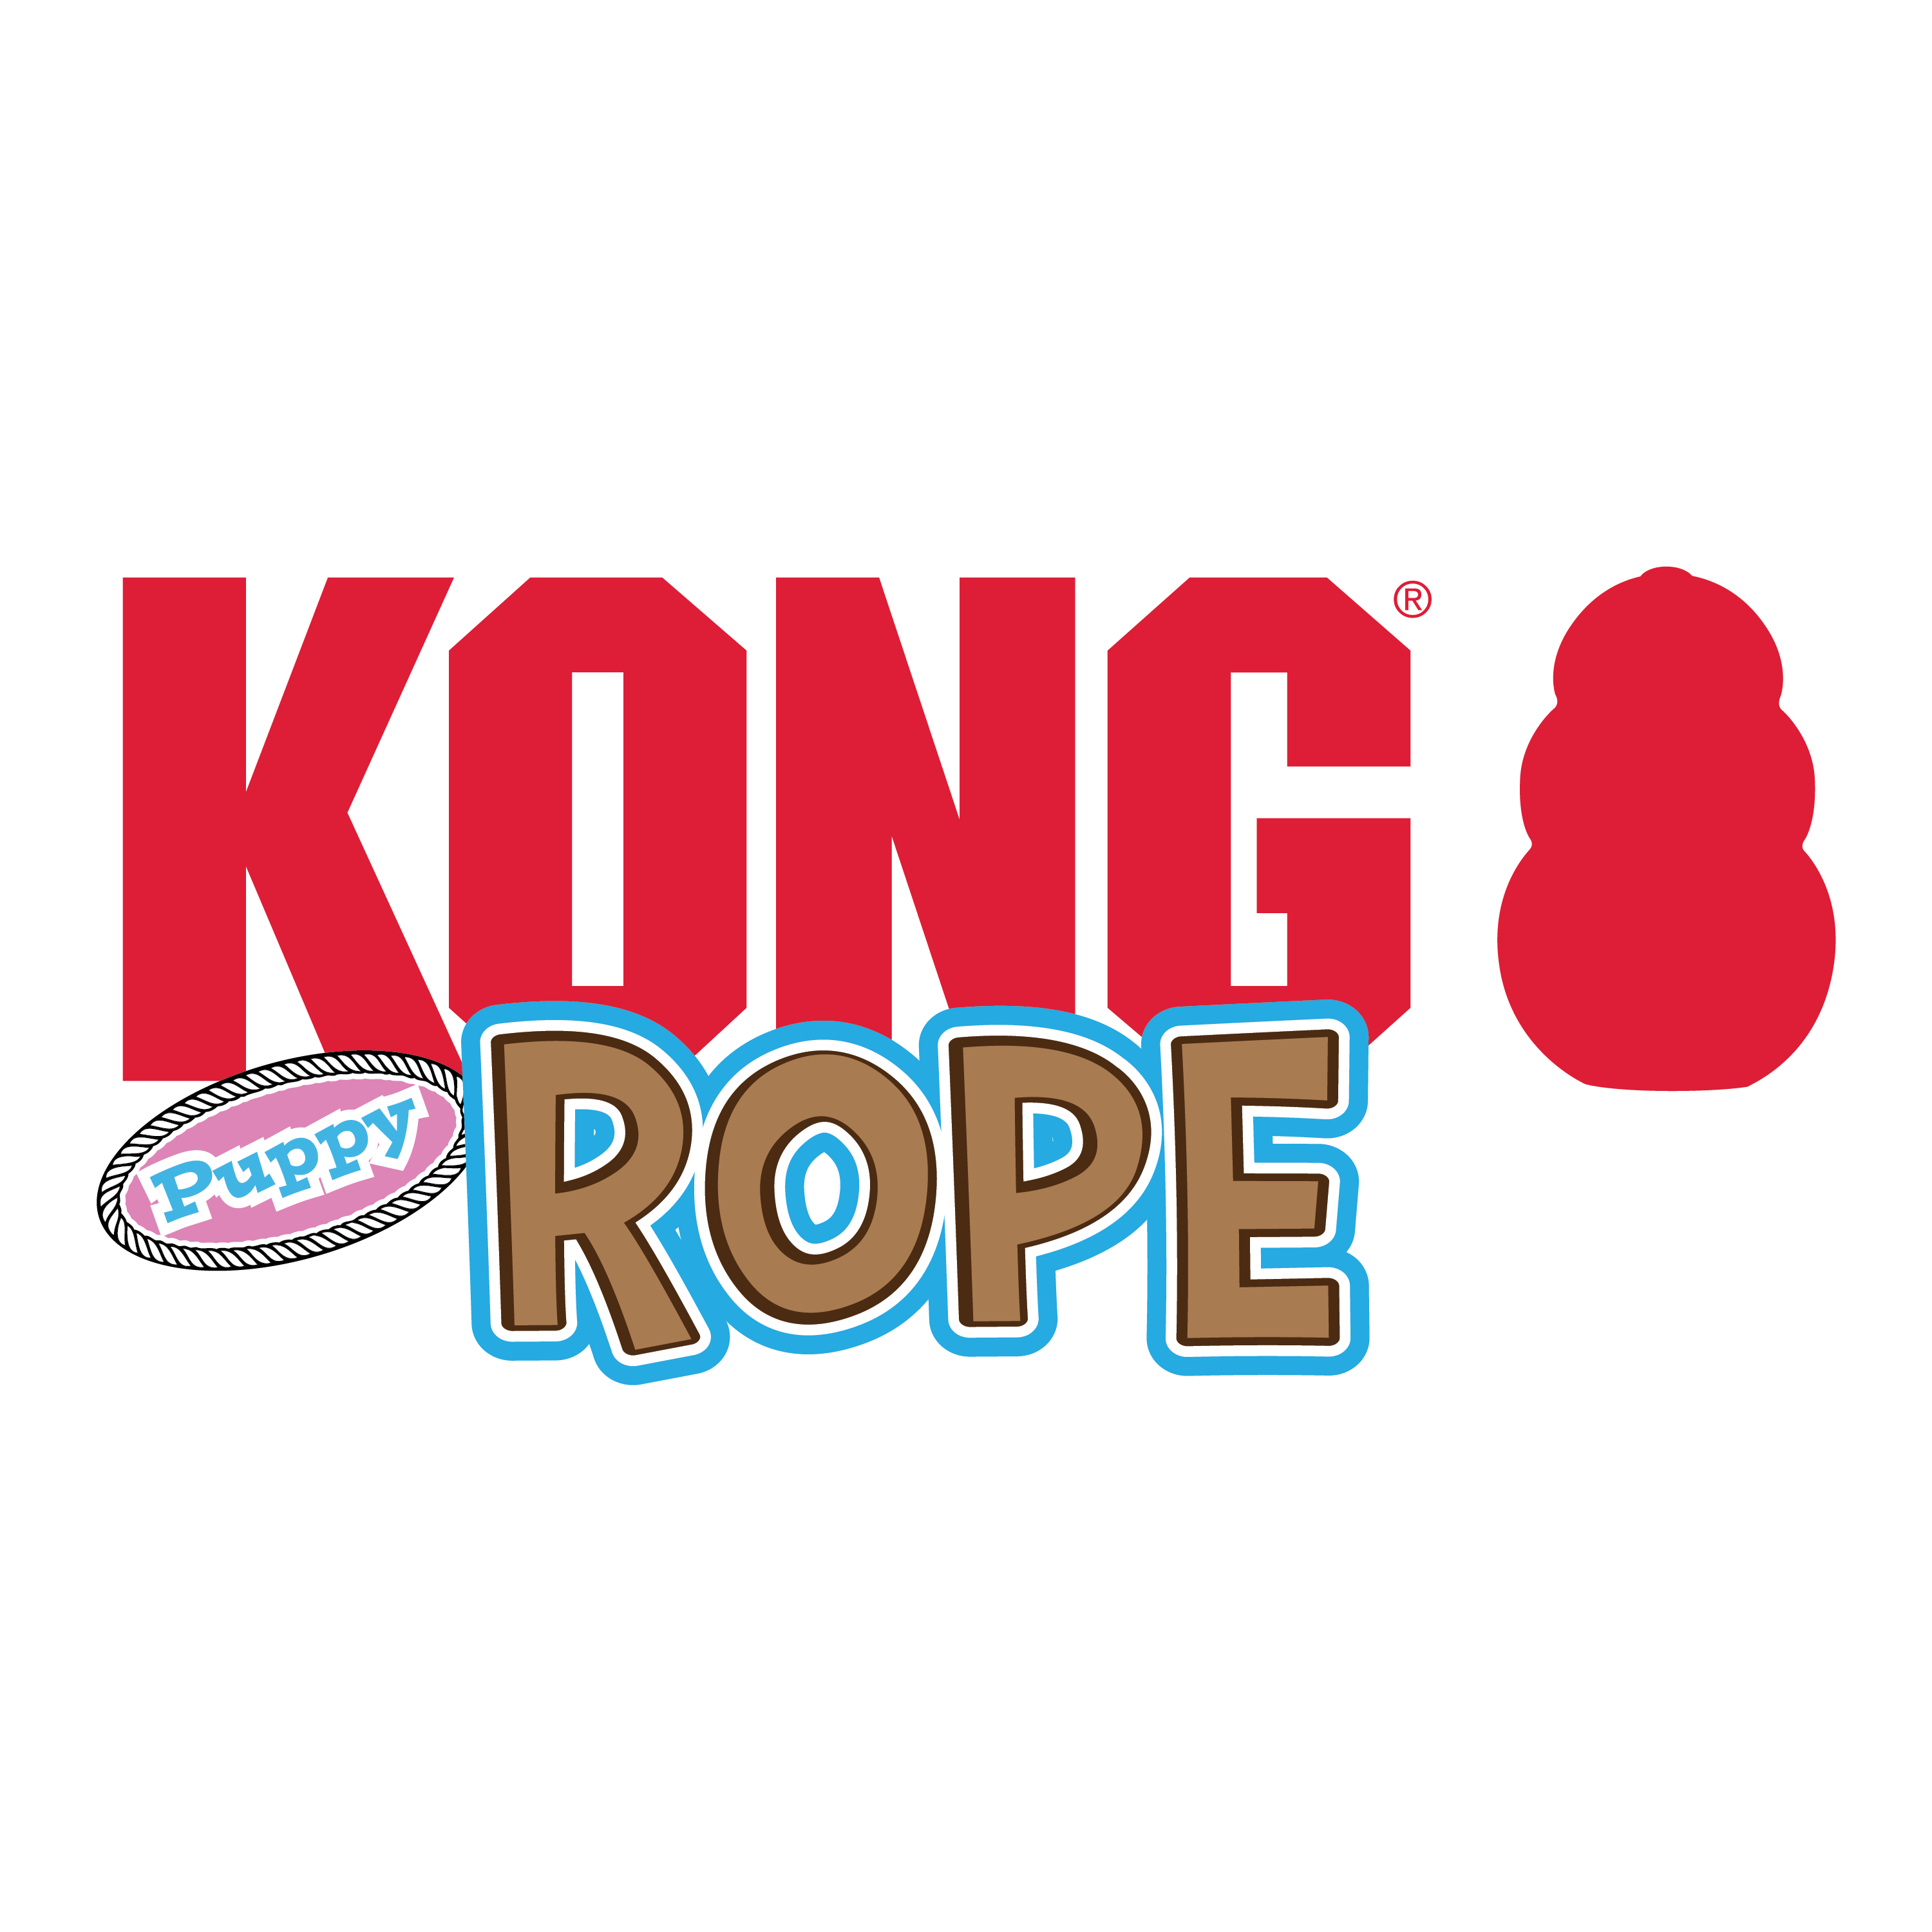 Rope Ring Puppy alt1 imagen de producto